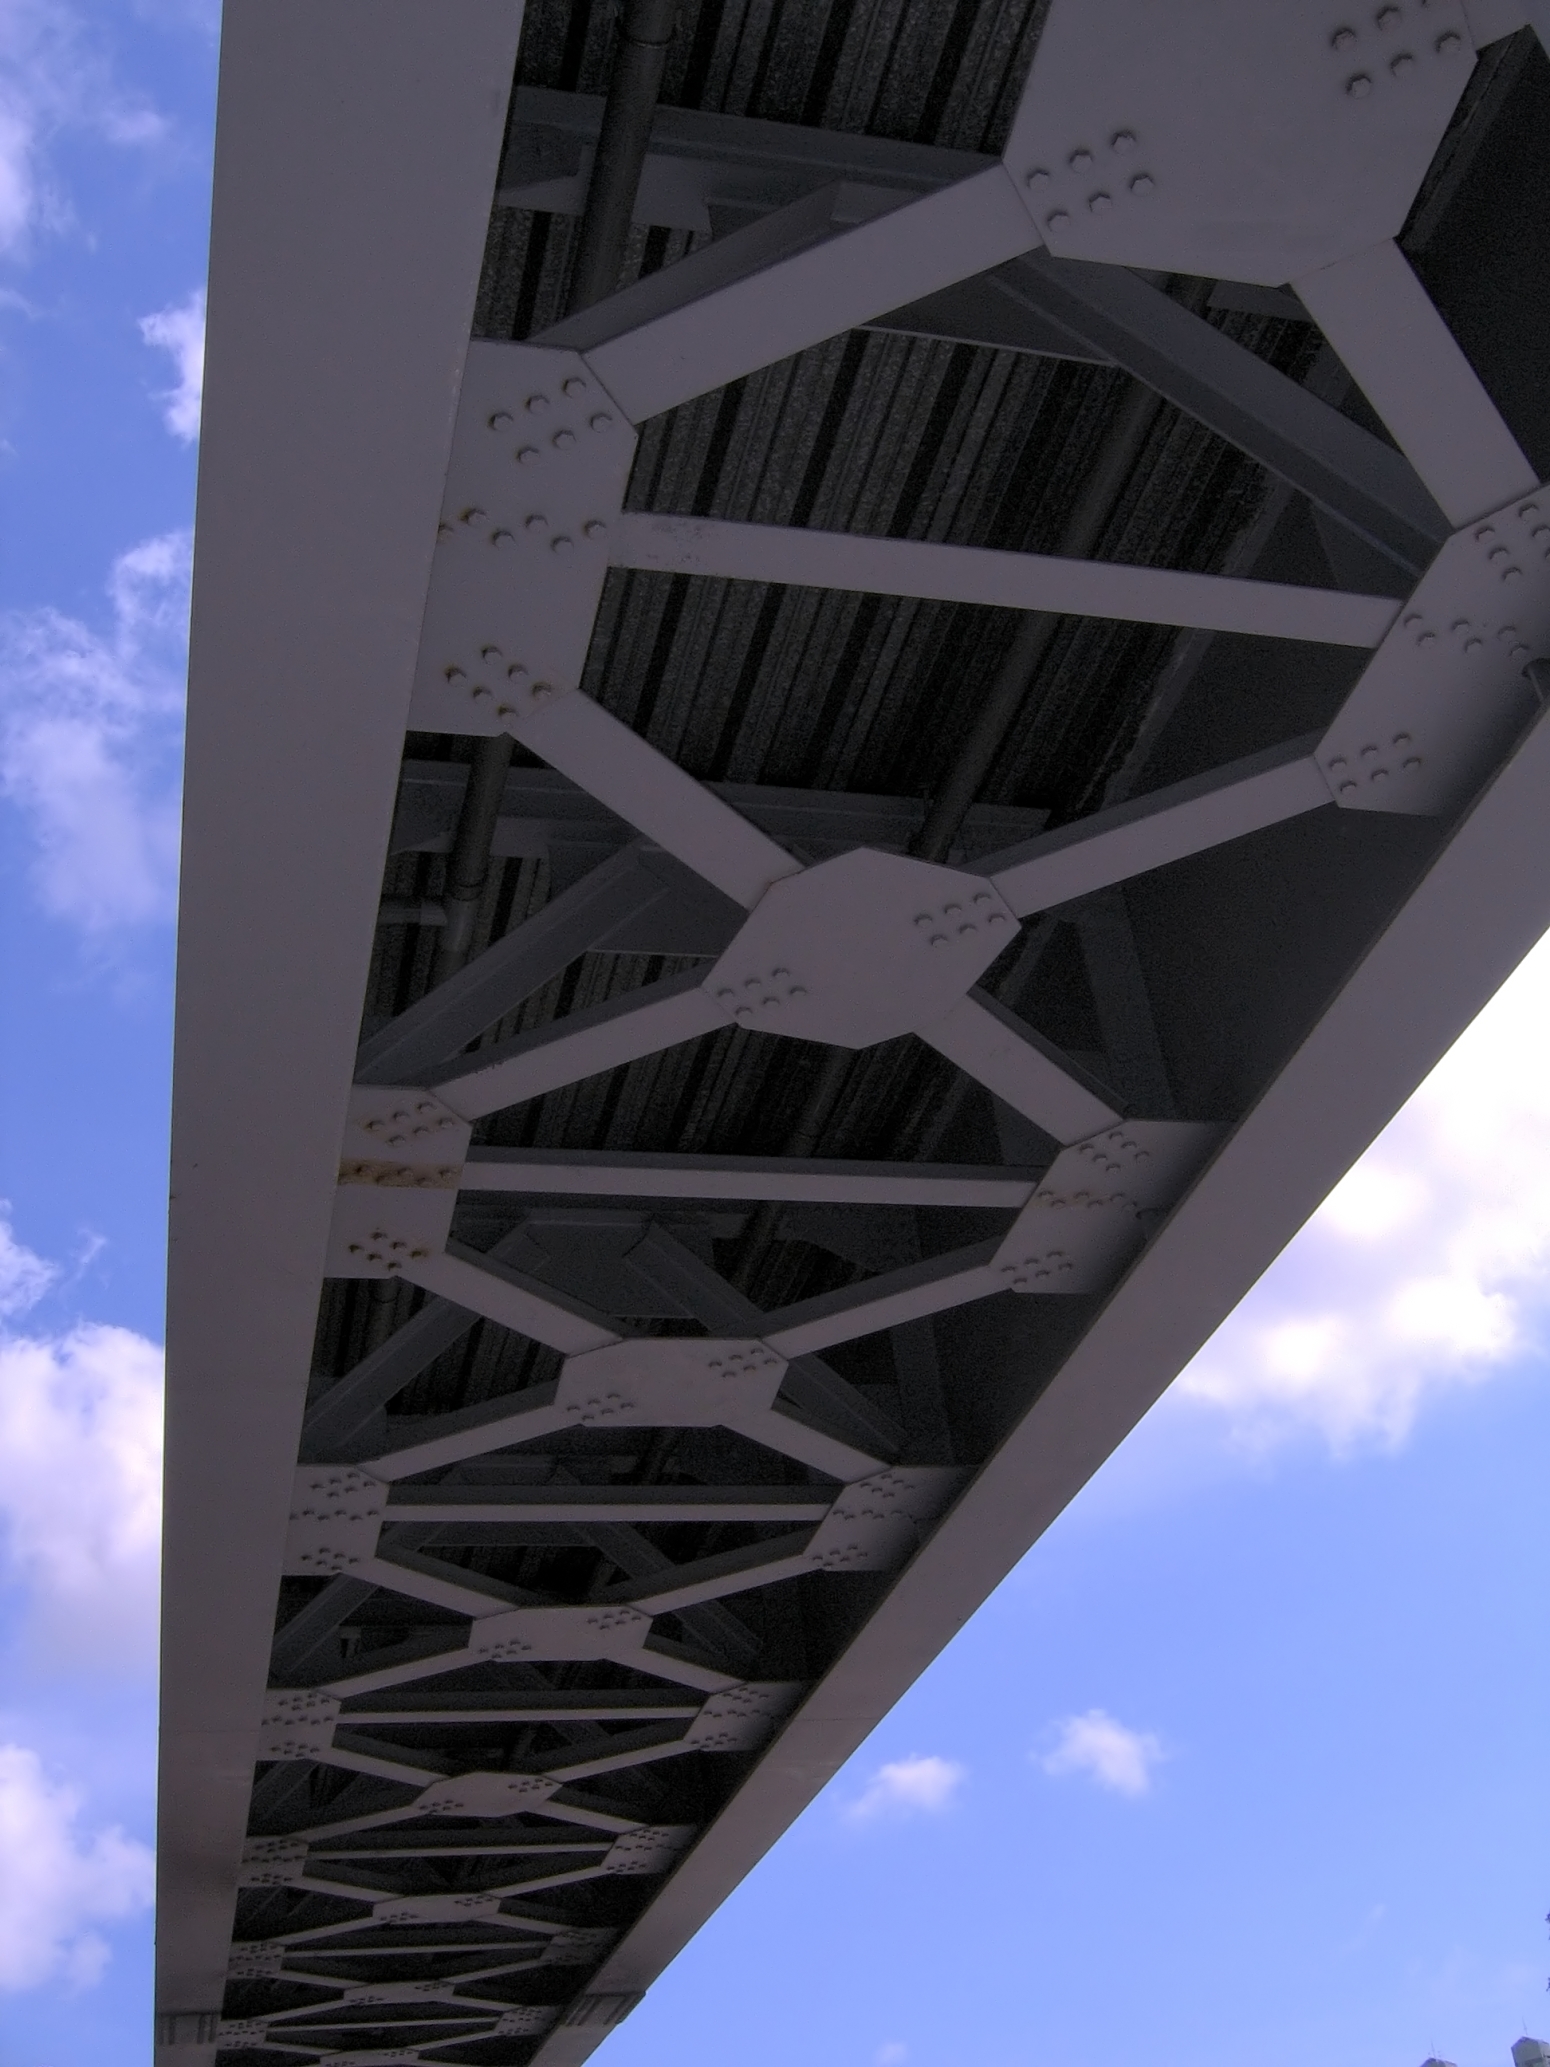 Iron bridge photo